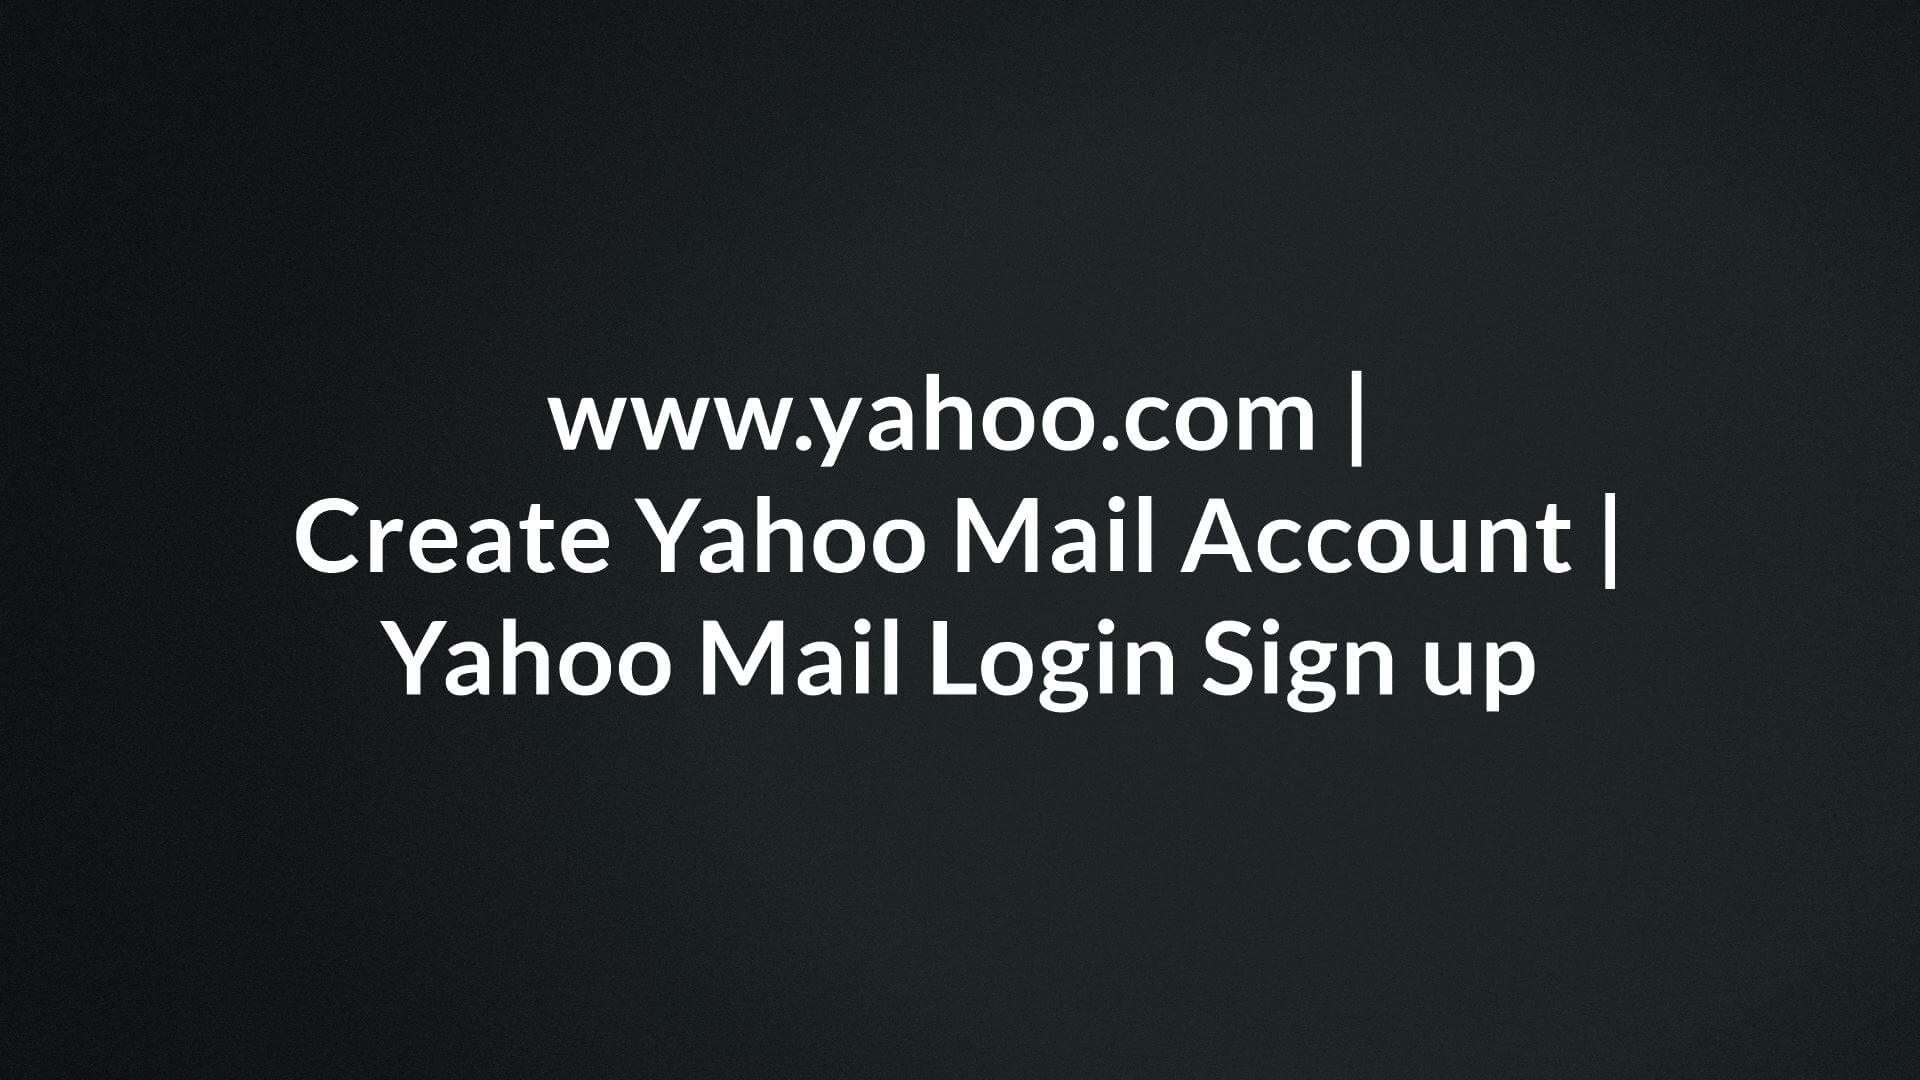 www.yahoo.com, Create Yahoo Mail Account, Yahoo Mail Login Sign up